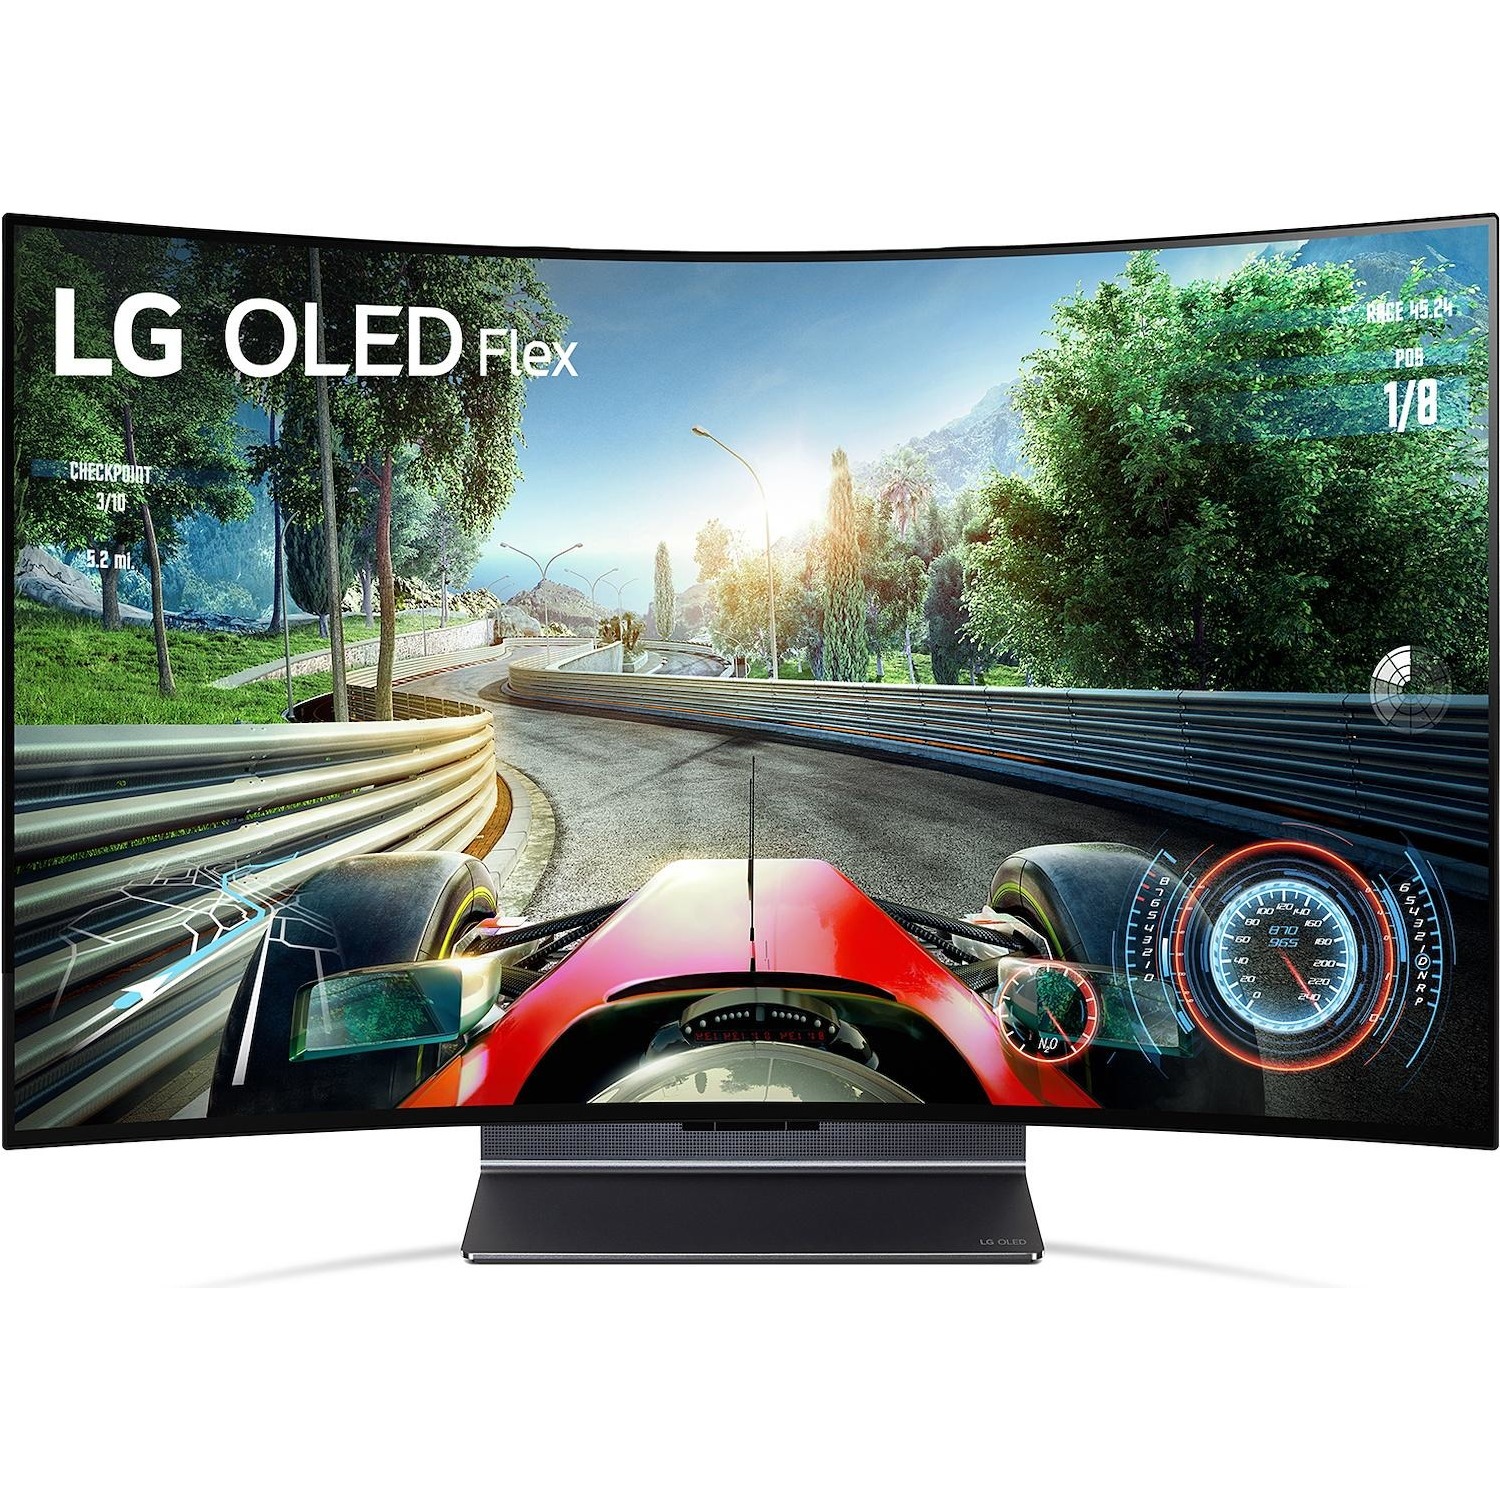 Immagine per TV OLED LG FLEX 42LX3Q6 Smart 4k Ultra HD da DIMOStore